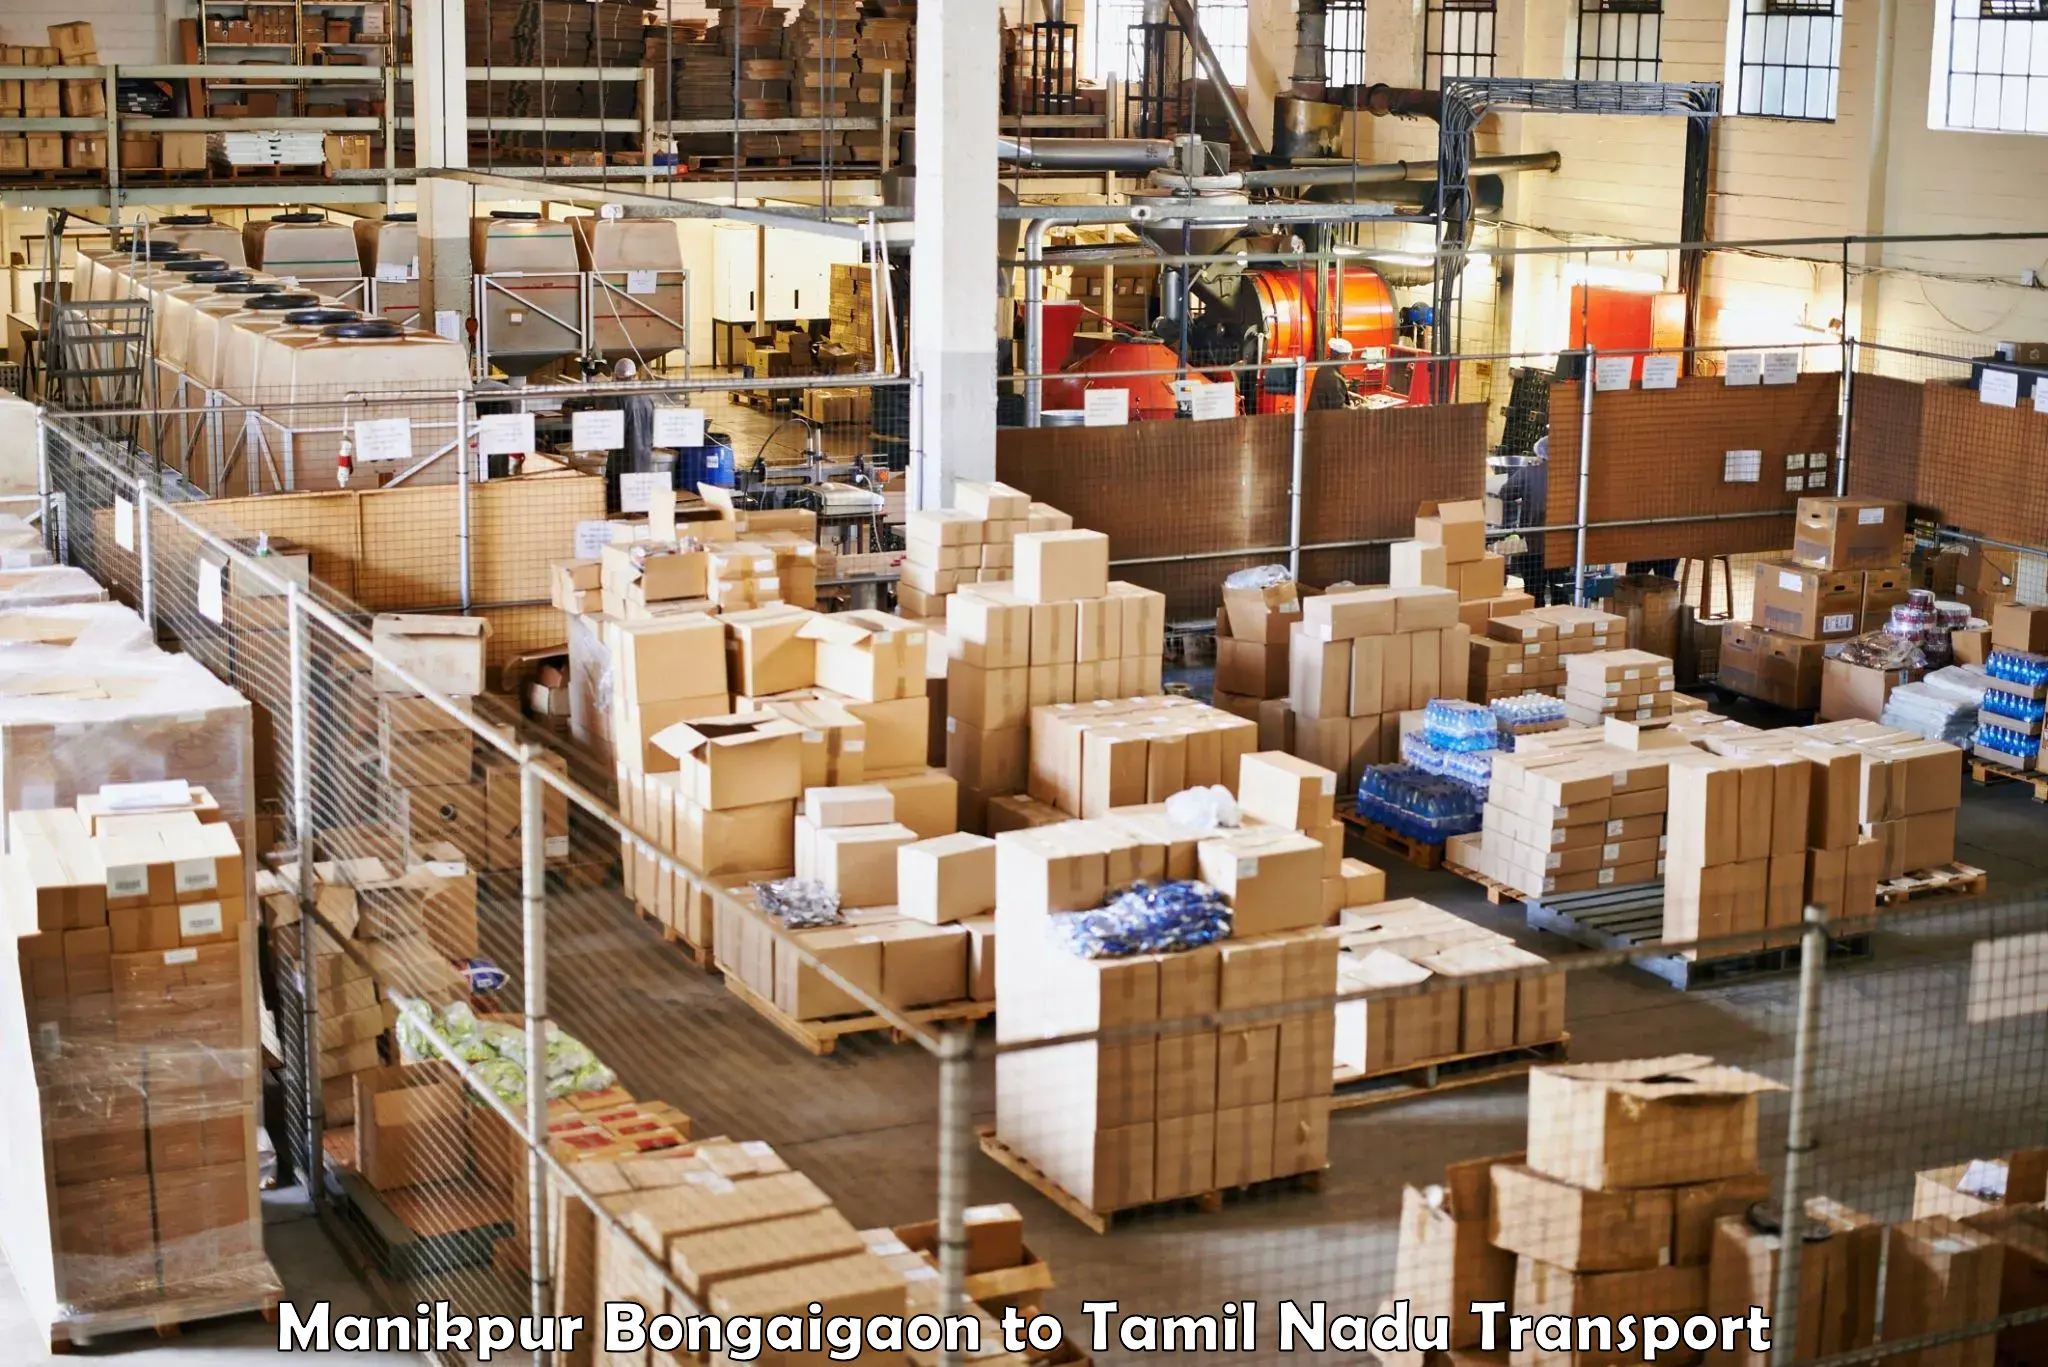 Shipping partner Manikpur Bongaigaon to Chennai Port